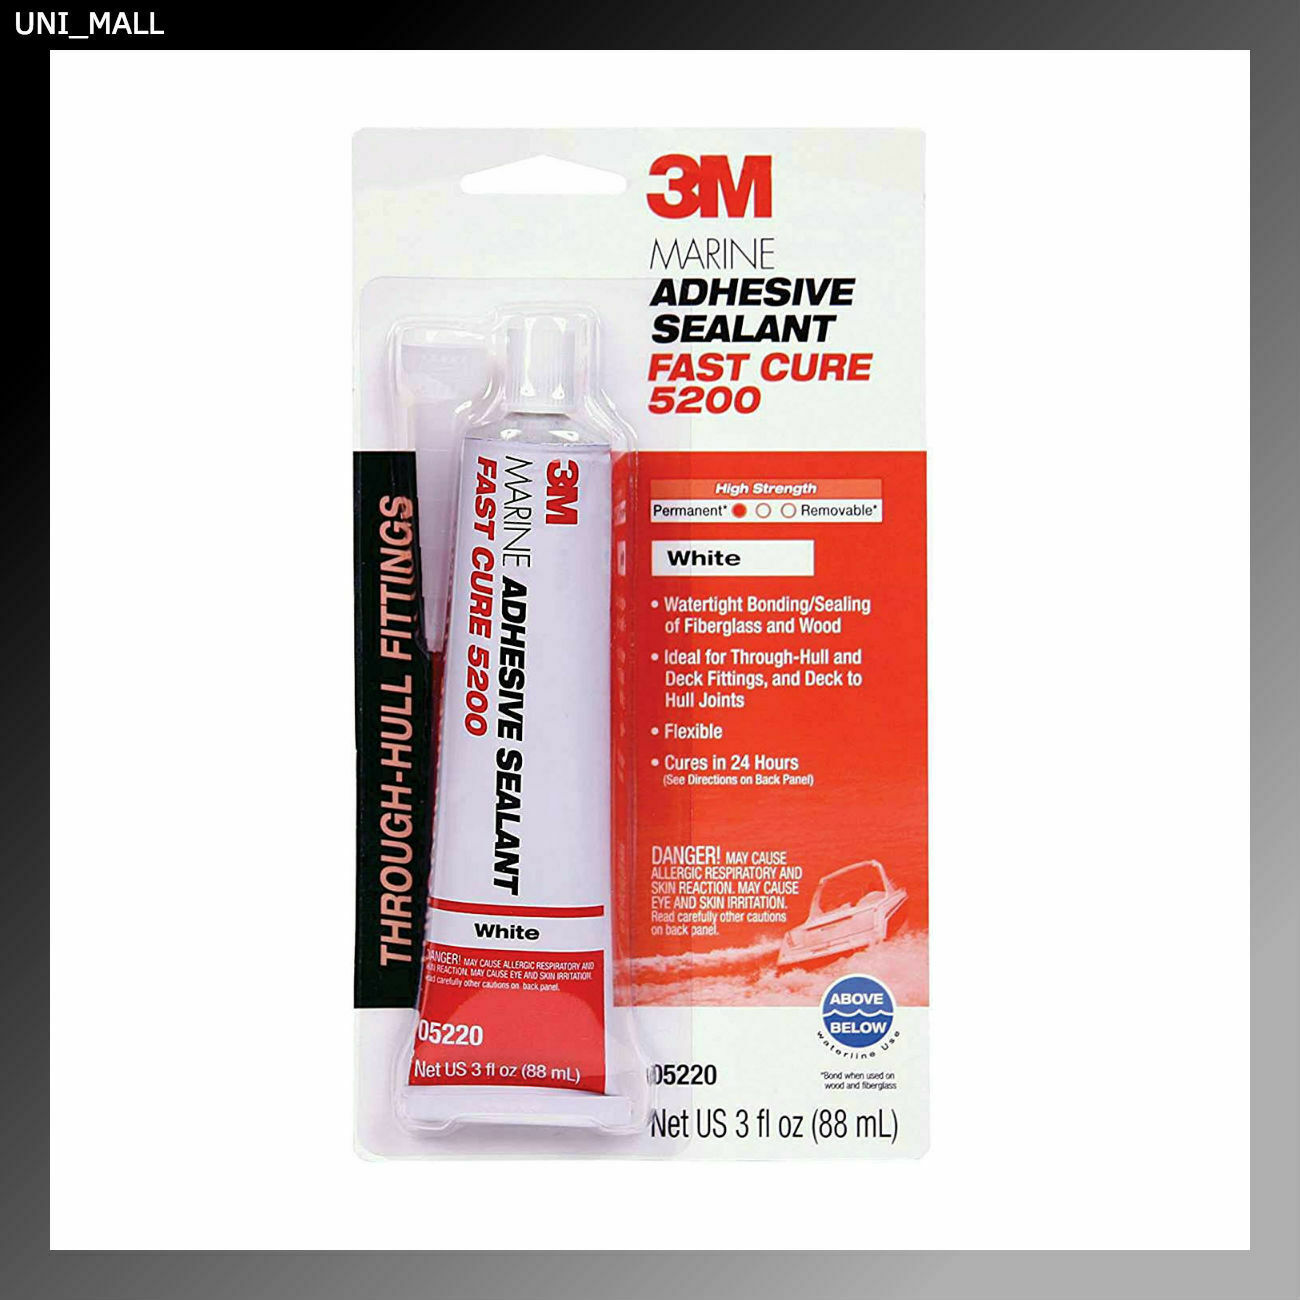 3m Marine Adhesive Sealant 5200 Fast Cure White, 05220 (3 Oz Tube)